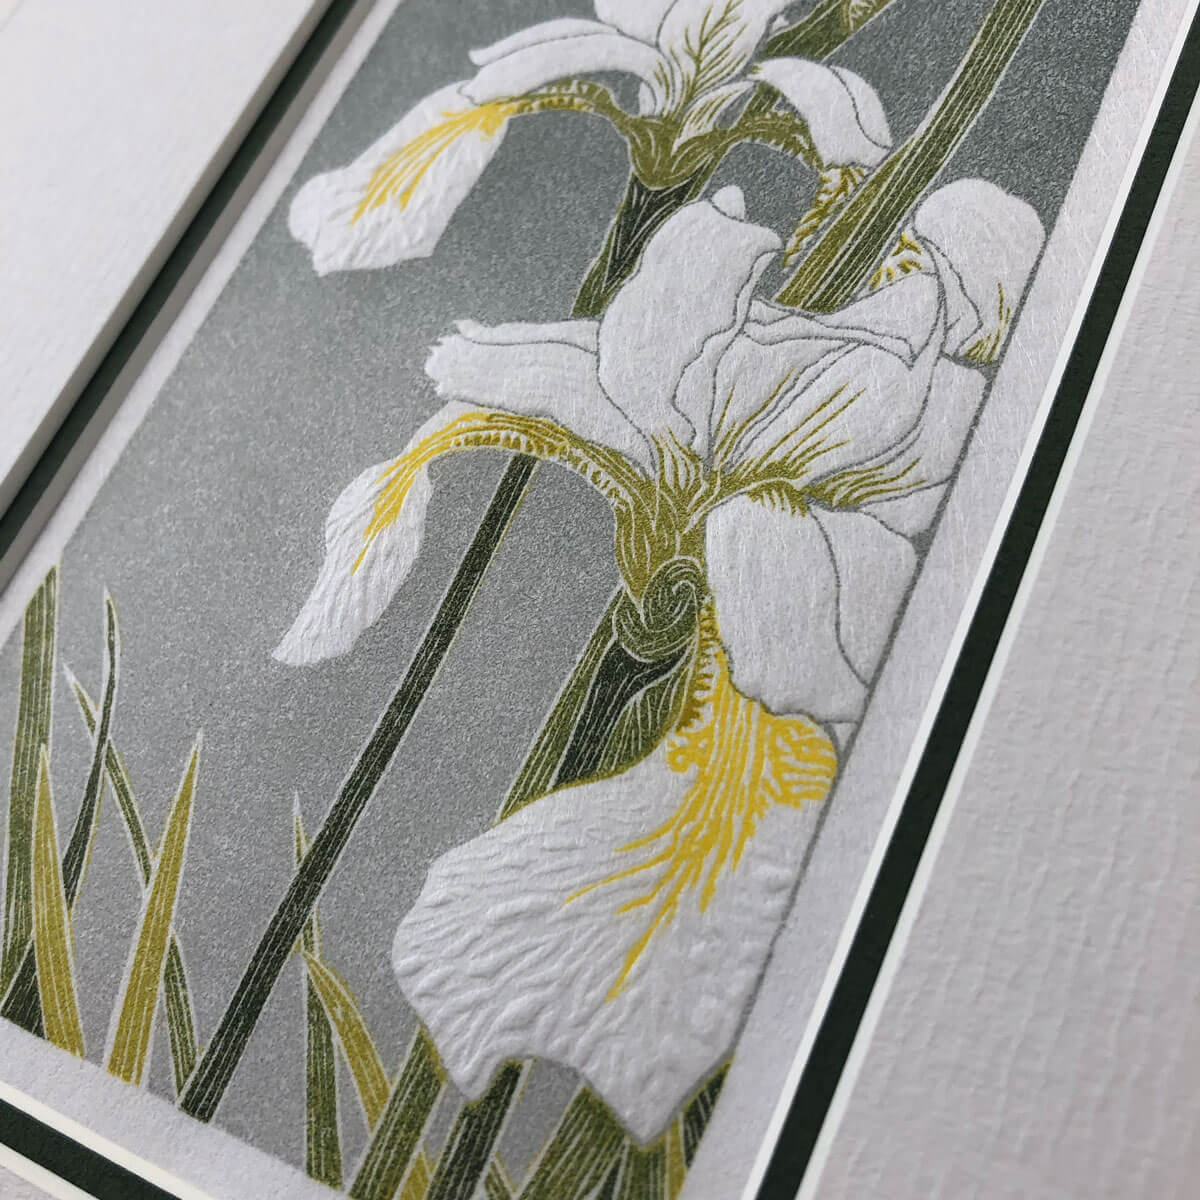 handmade linocut print of white iris flowers against a grade grey background